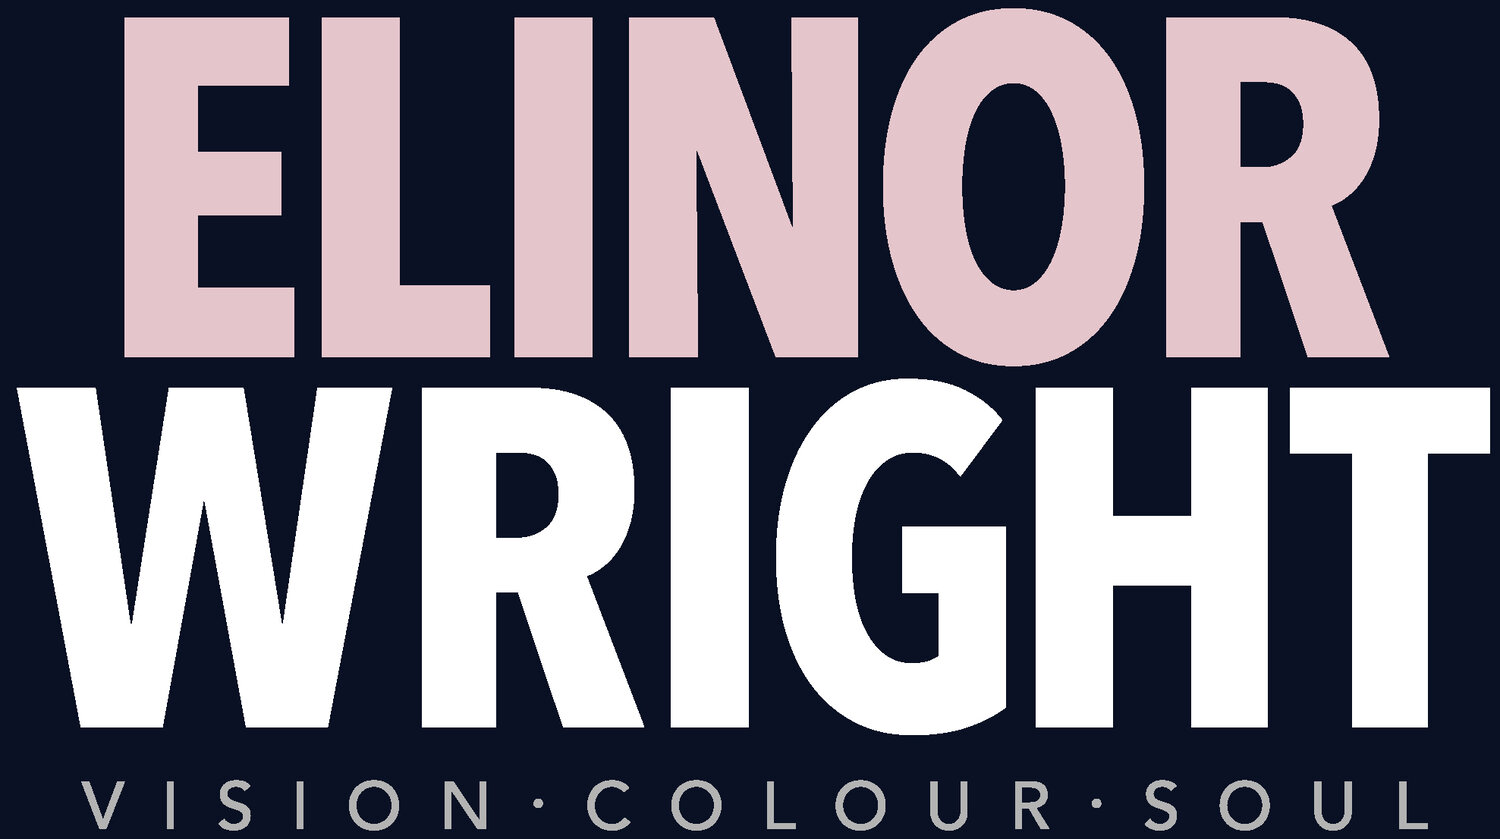 Elinor Wright Interiors